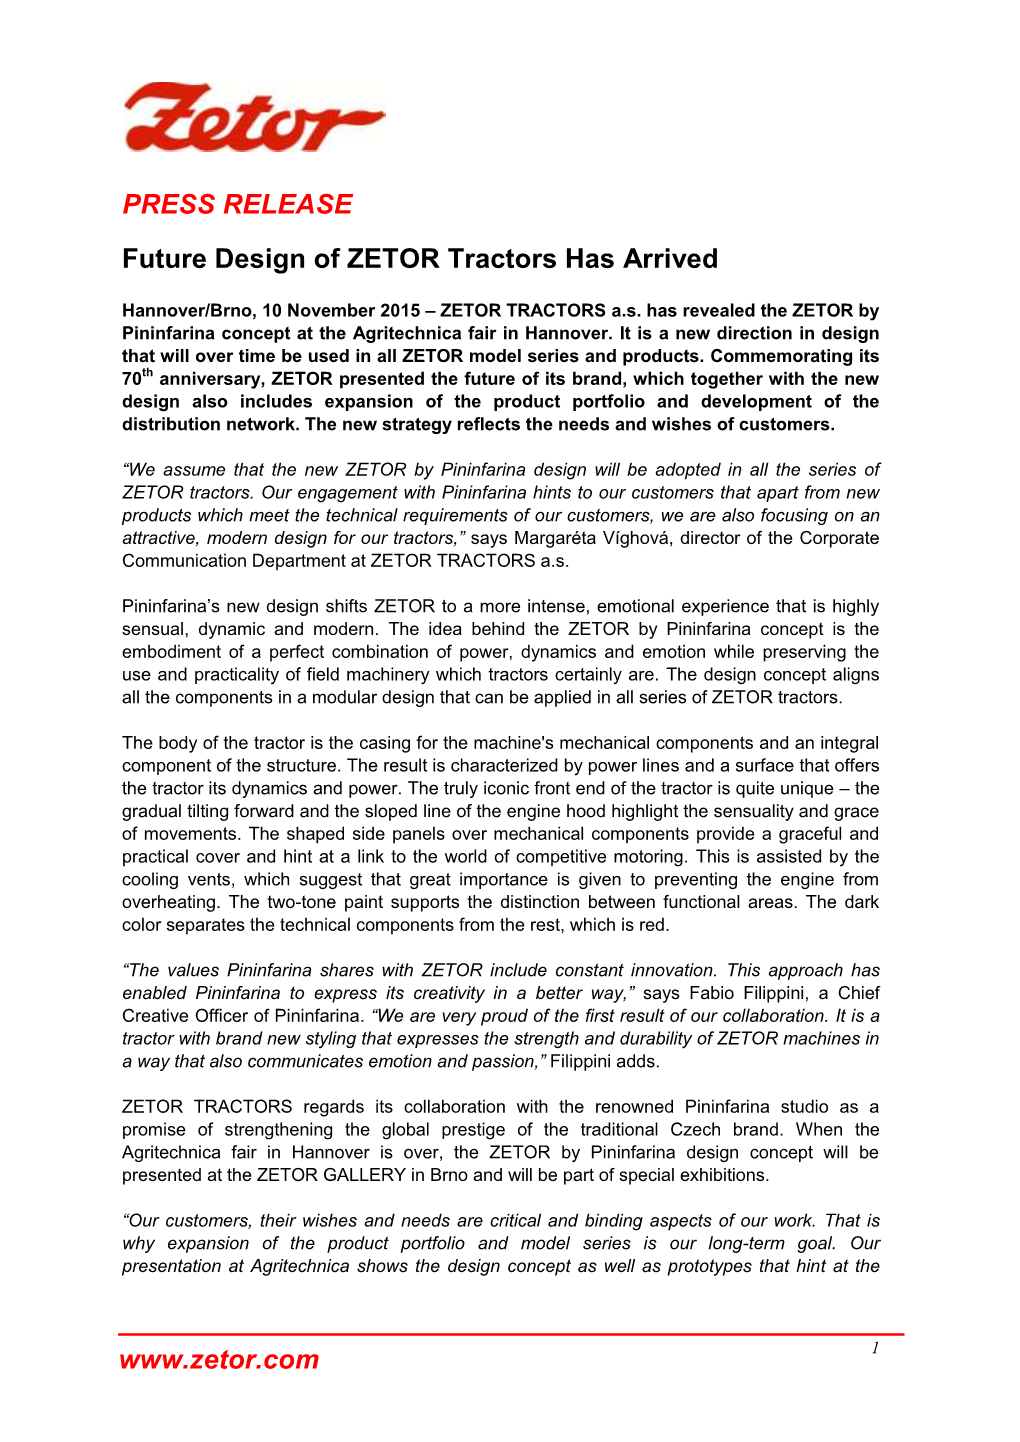 PRESS RELEASE Future Design of ZETOR Tractors